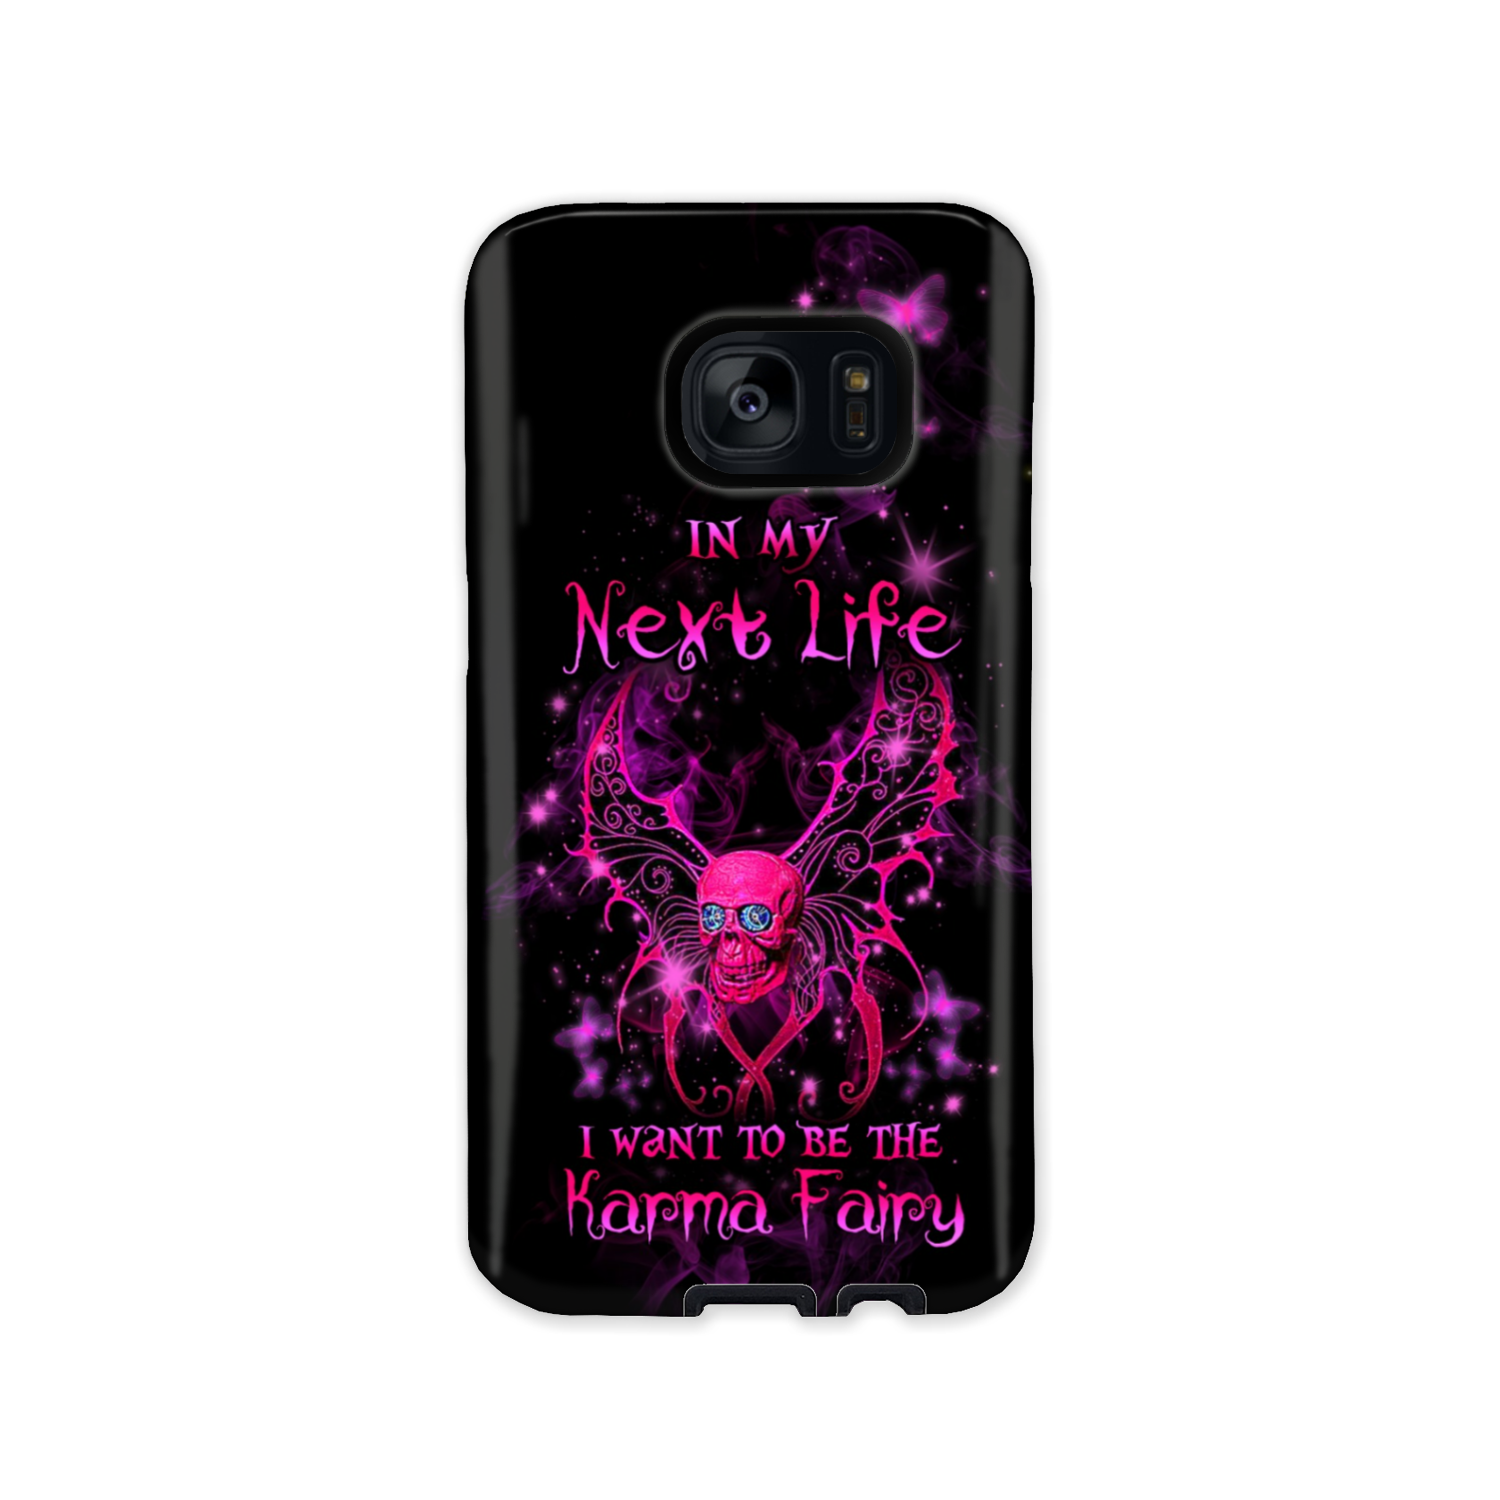 KARMA FAIRY SKULL PHONE CASE - YHLN0601232